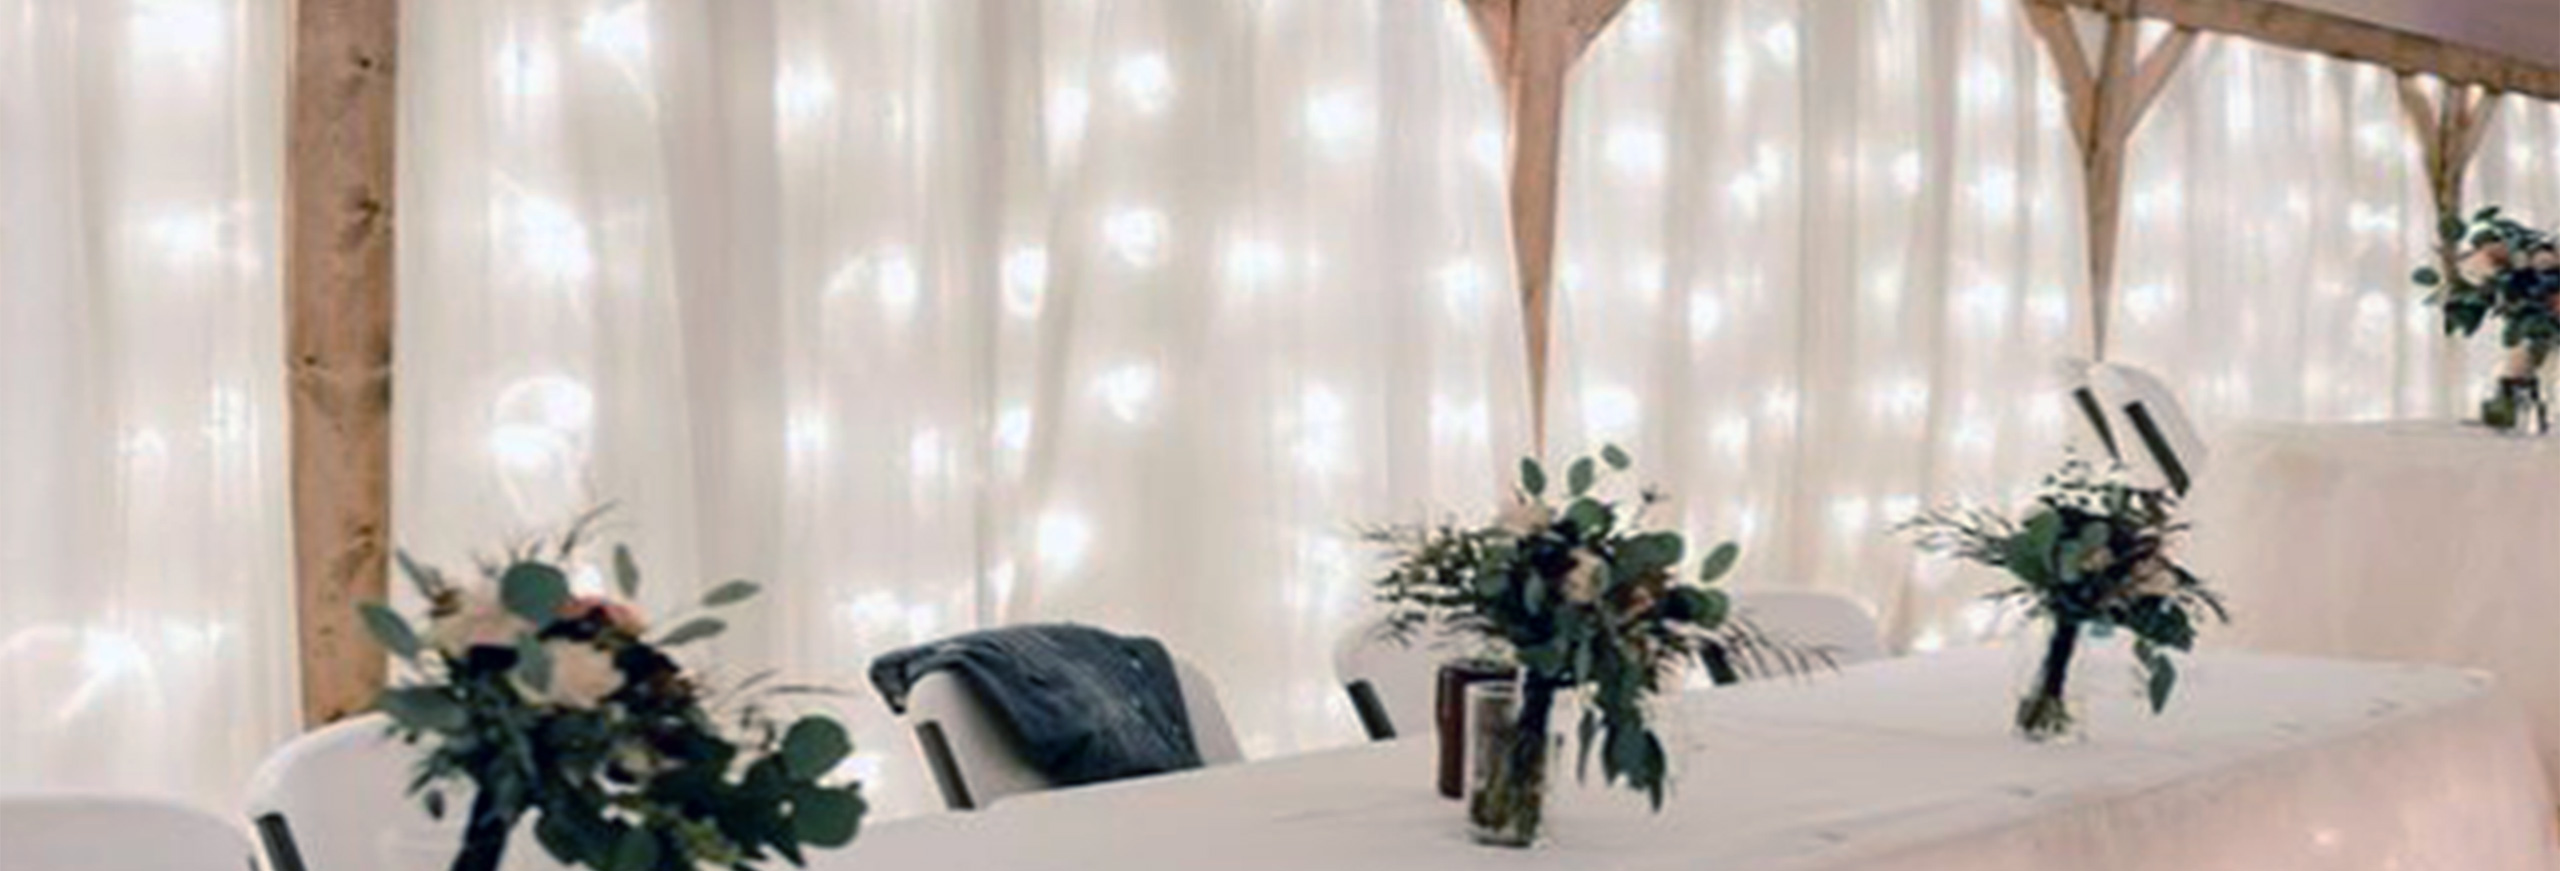 backdrop lighting for wedding table